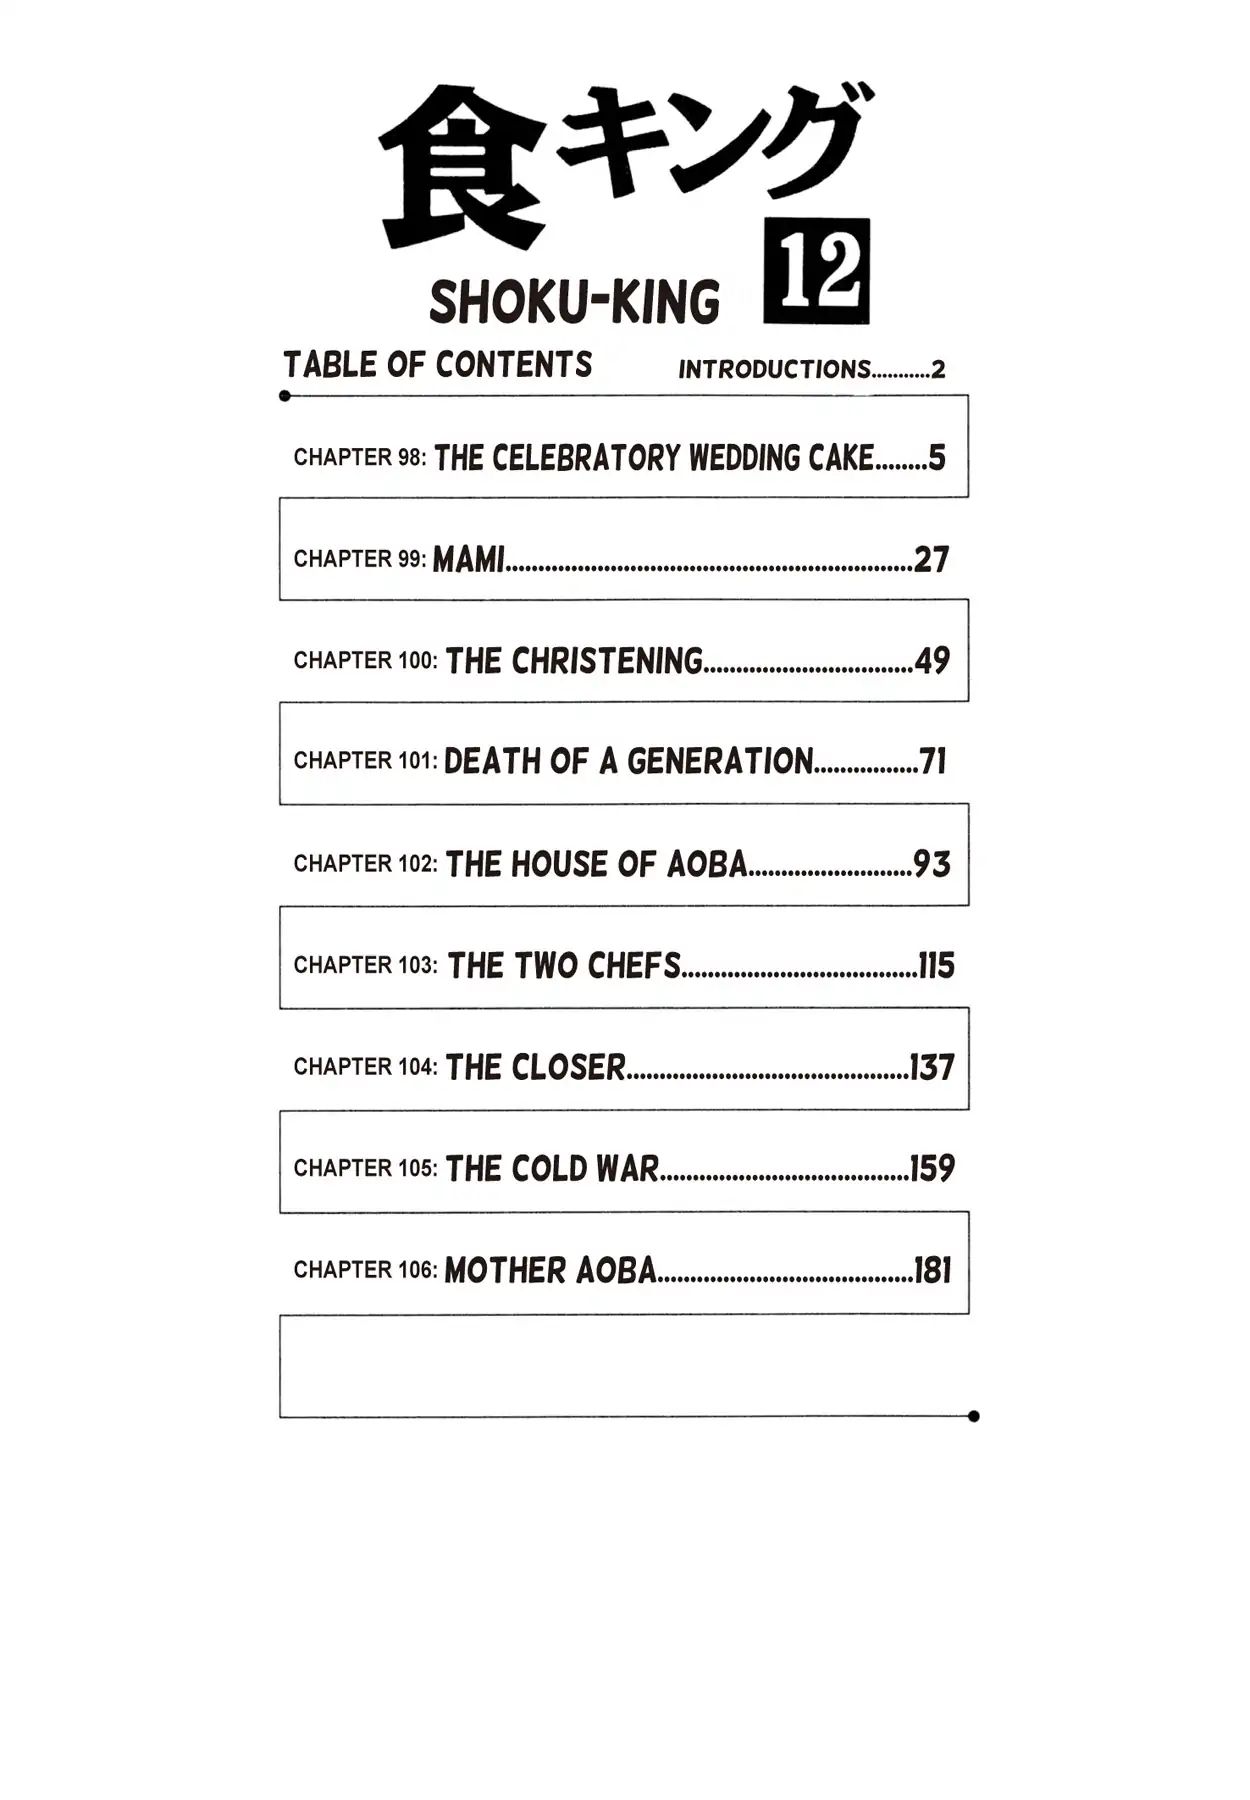 Shoku King VOL.12 CHAPTER 98: THE CELEBRATORY WEDDING CAKE